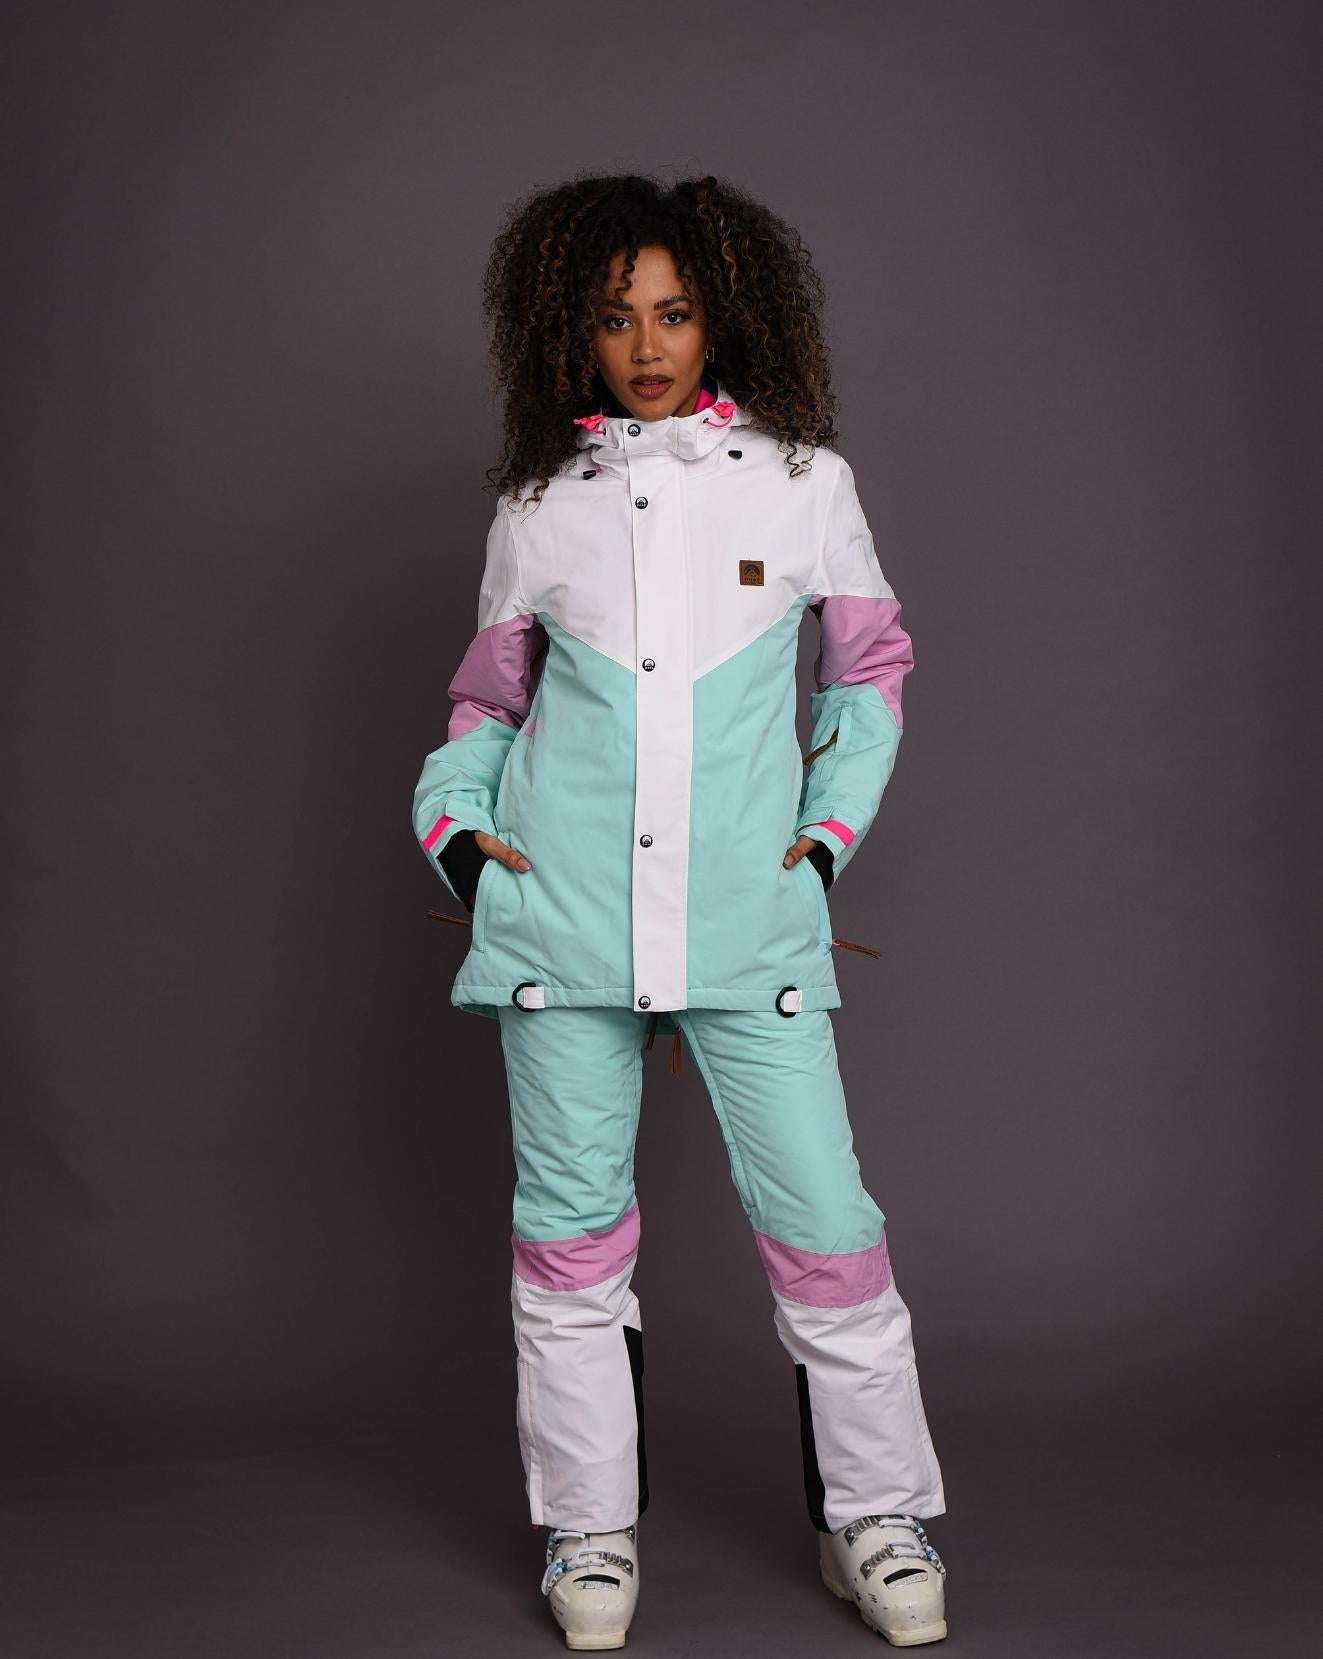 1080 Women's Ski & Snowboard Jacket - Pastel Pink, White & Pastel Mint –  OOSC Clothing - USA